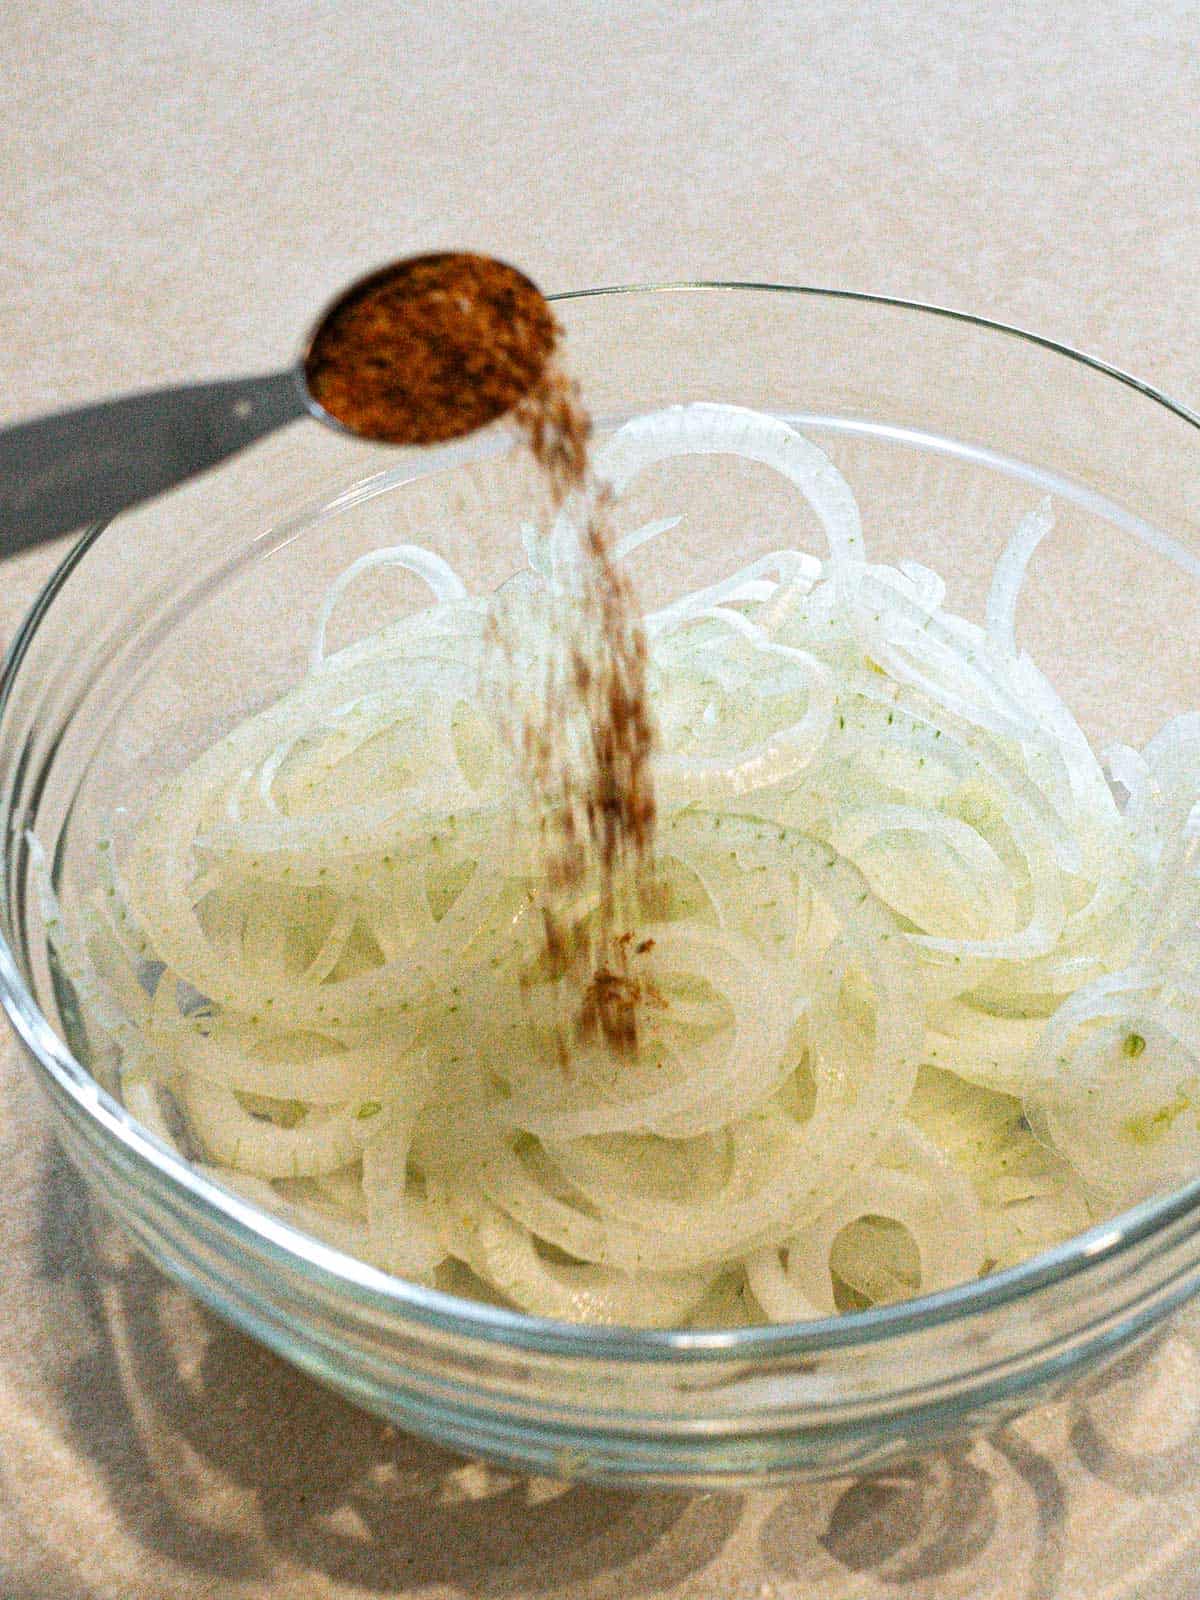 Adding cajun seasoning to onions.